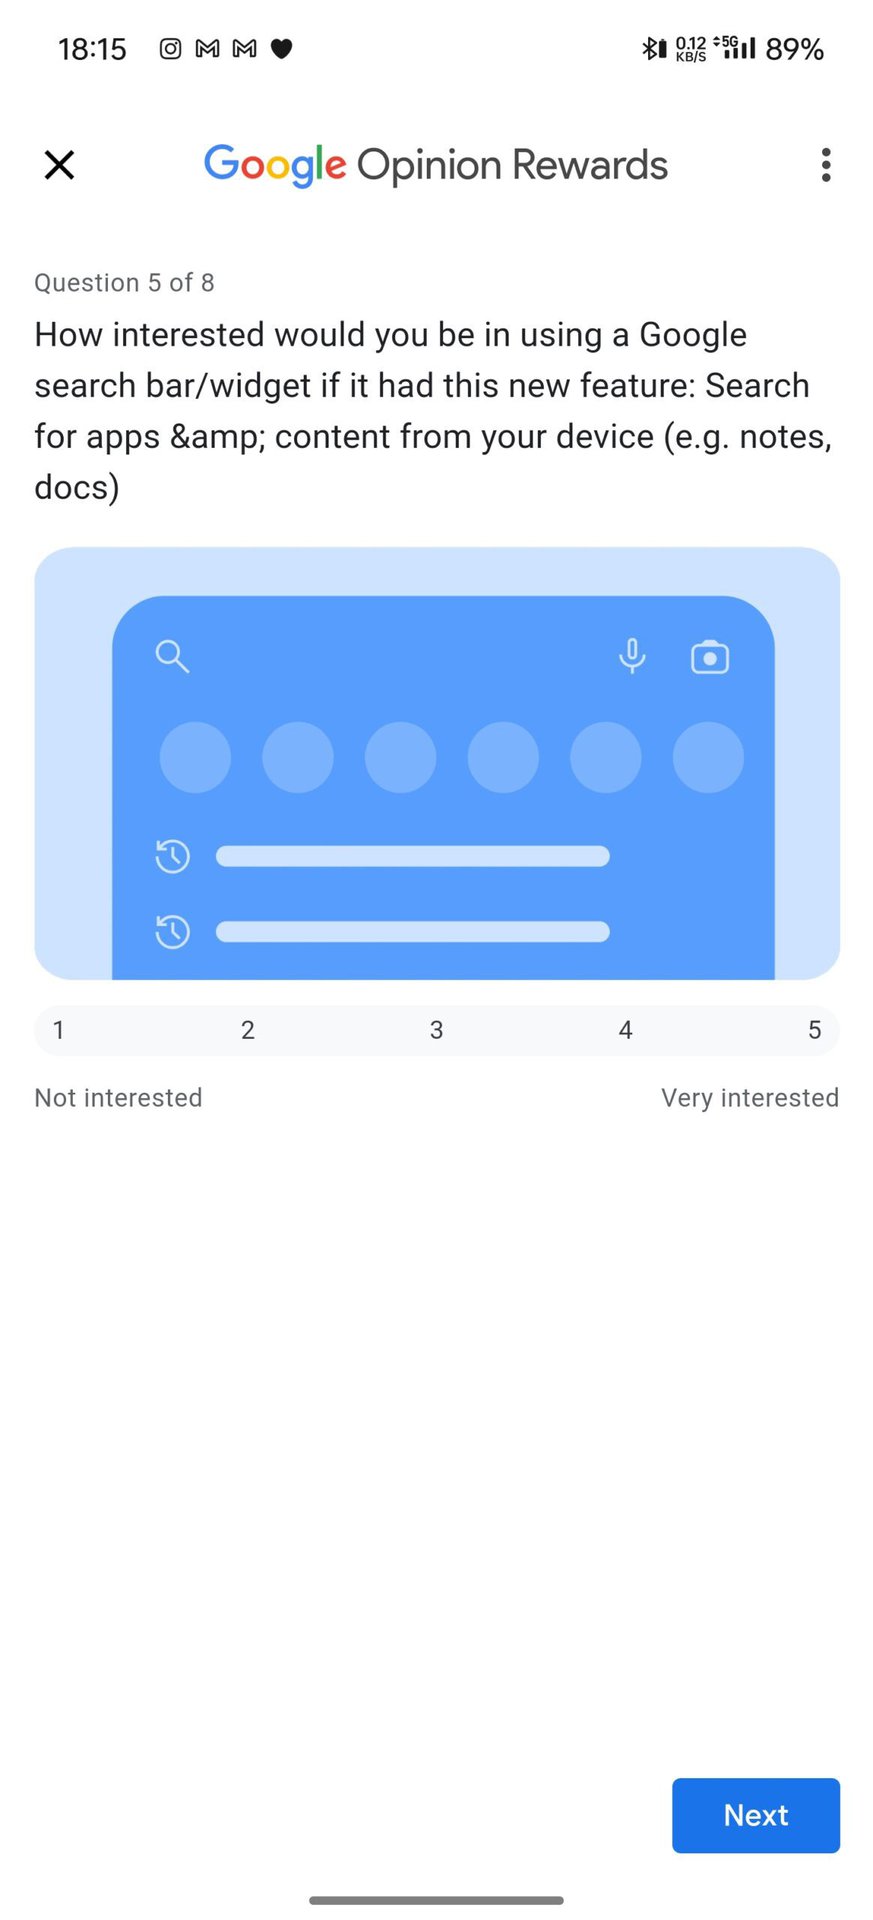 Google Opinion Rewards survery Google Search Home screen widget (3)